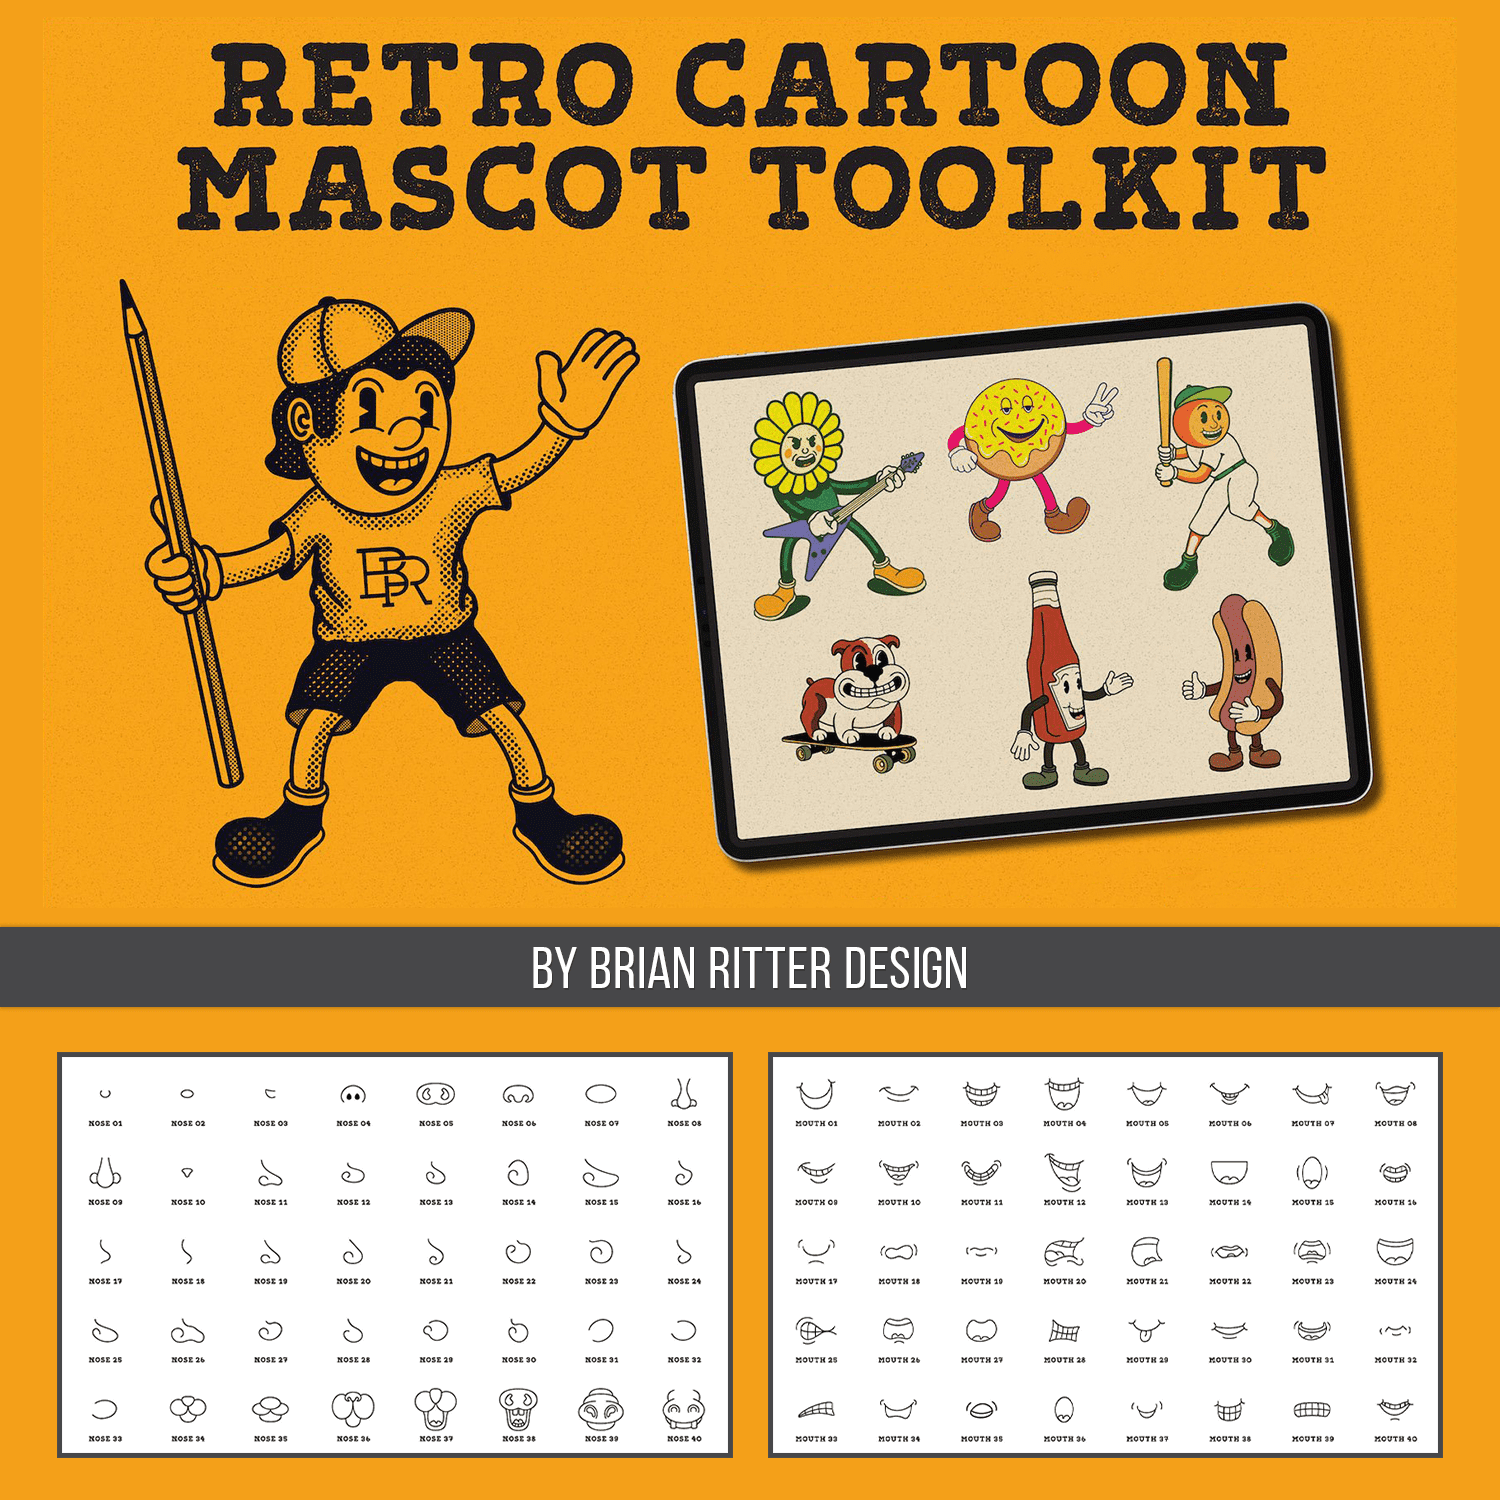 Retro Cartoon Mascot Toolkit cover.